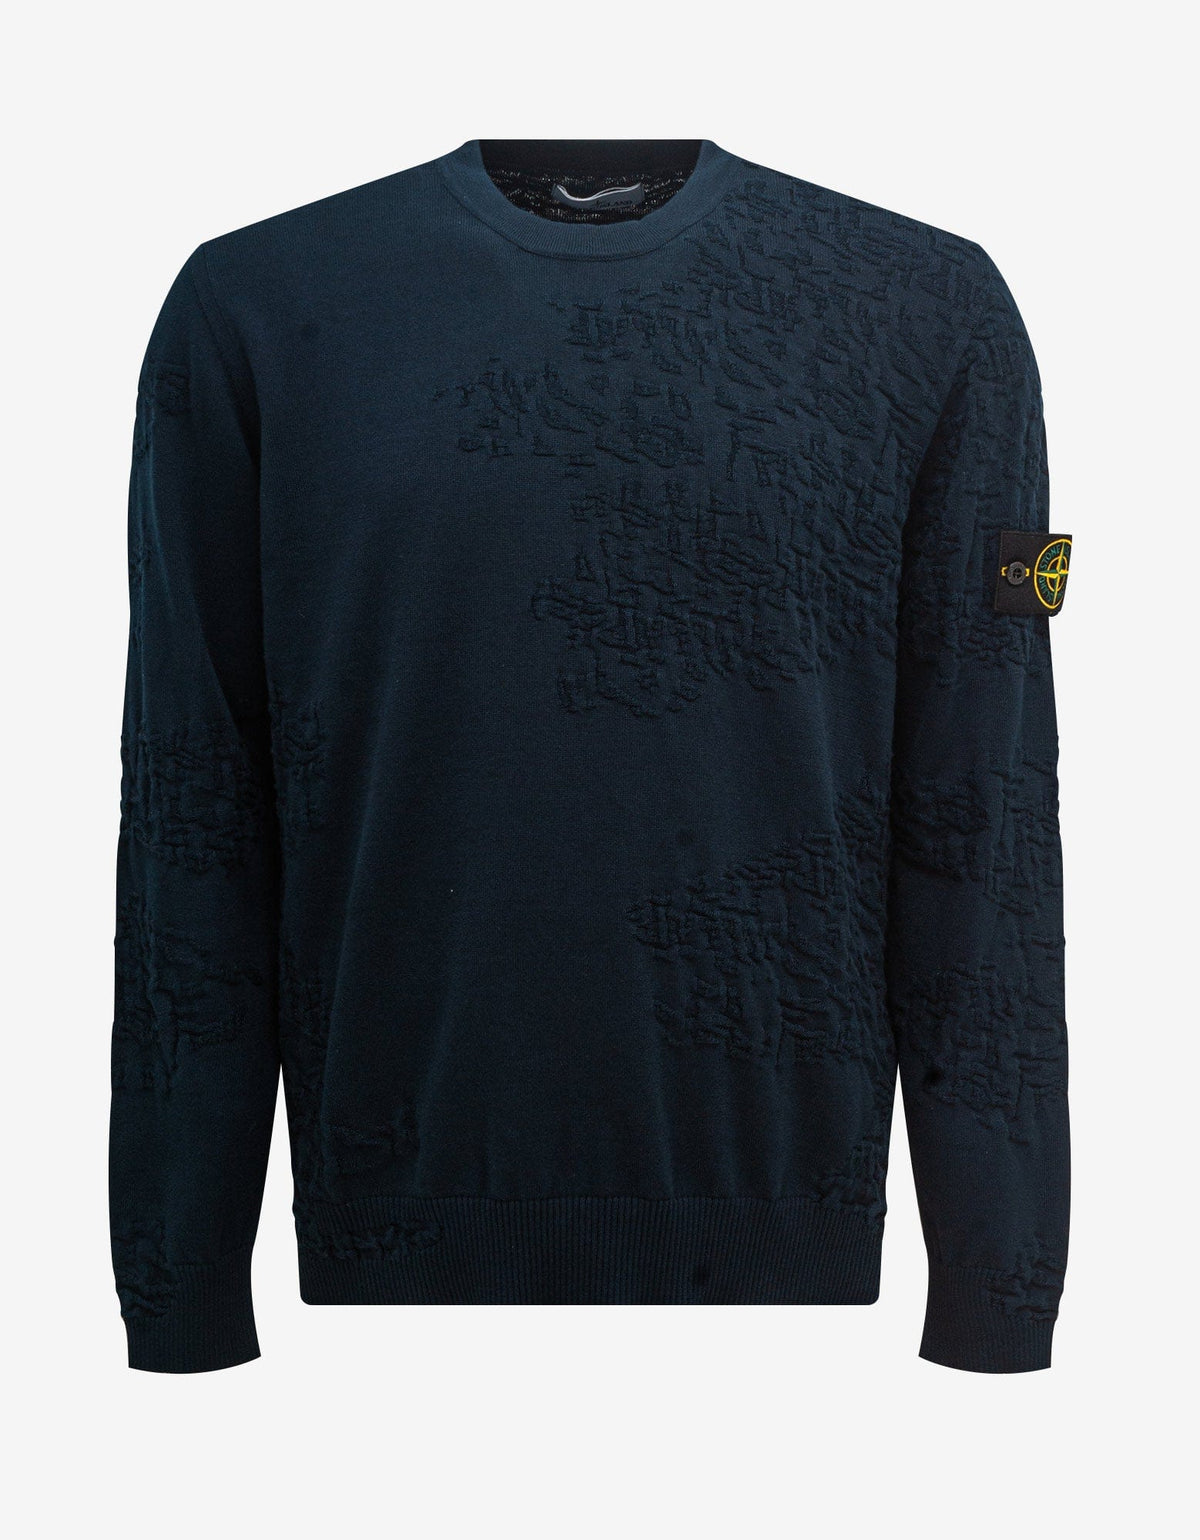 Stone Island Navy Blue Jacquard Sweater